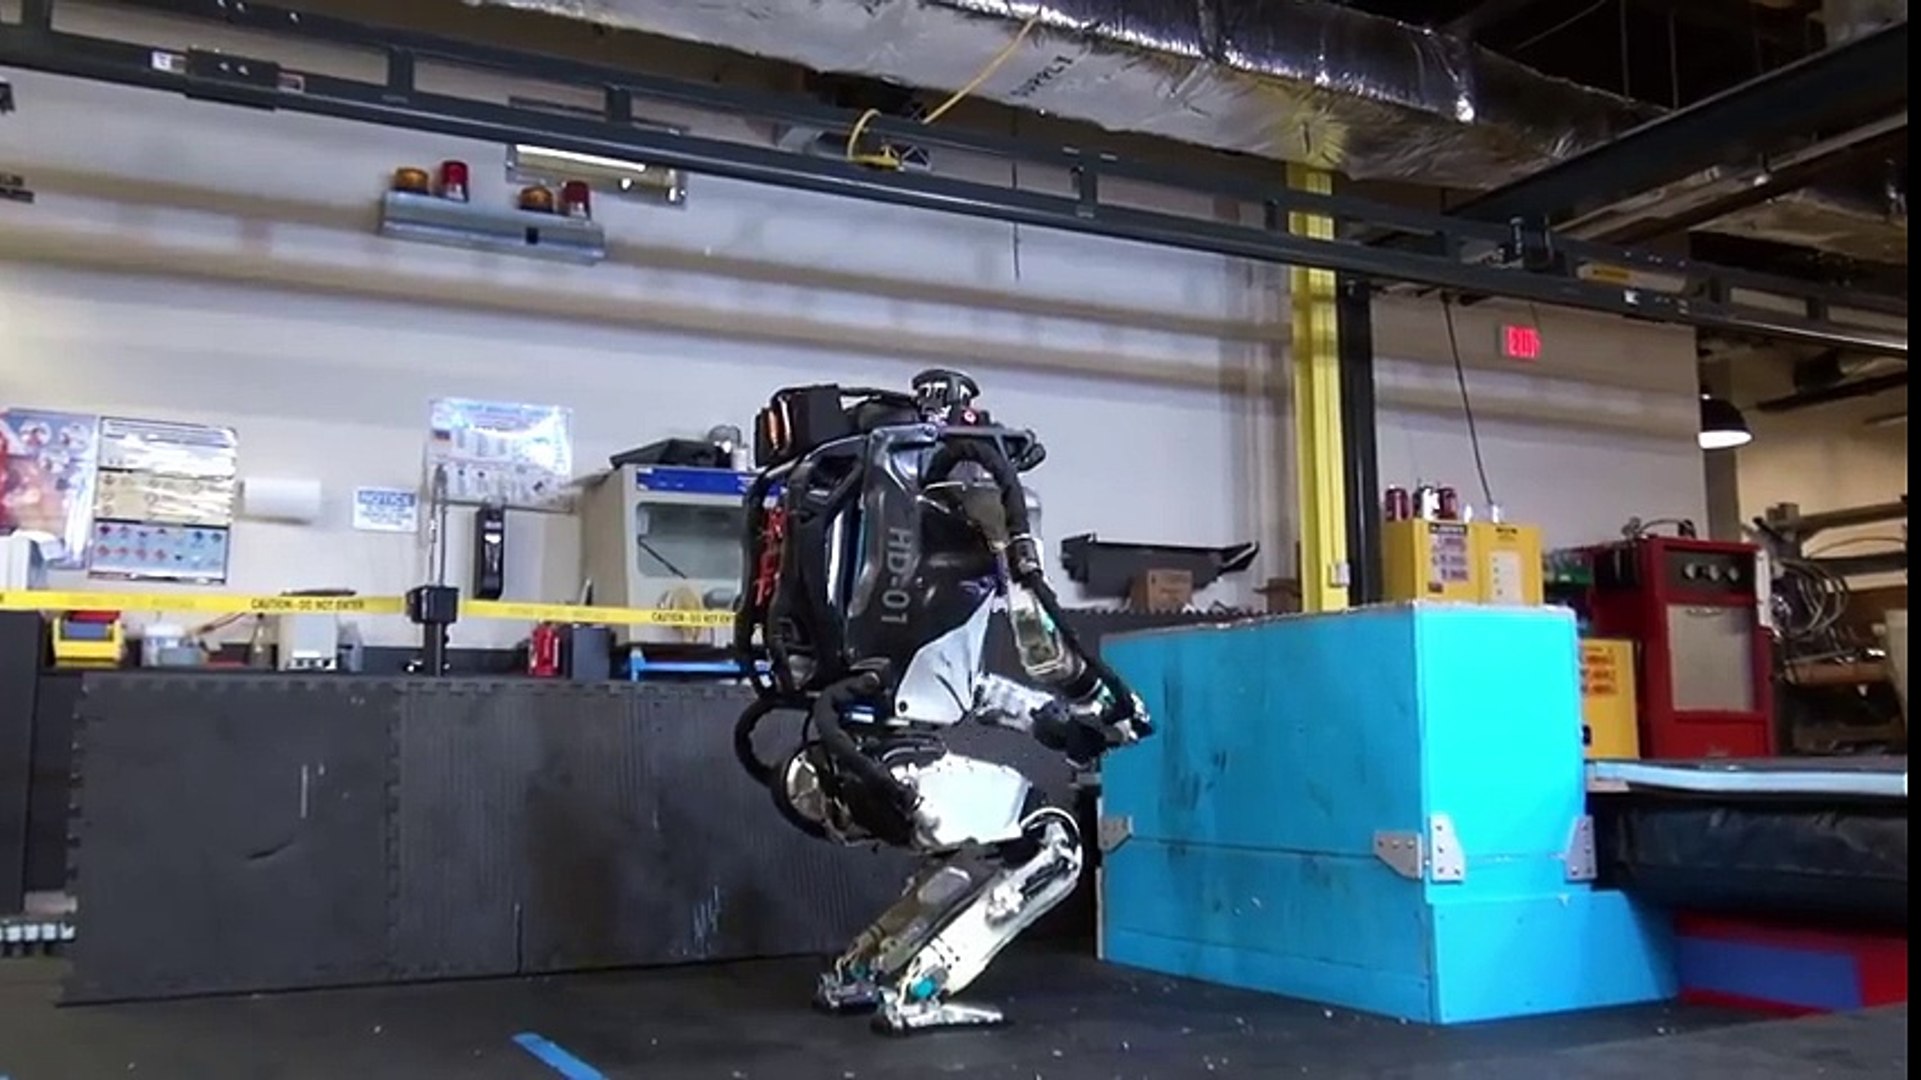 New Atlas Robot Skills - Robots able to Backflip and jump across platforms  - Dailymotion Video